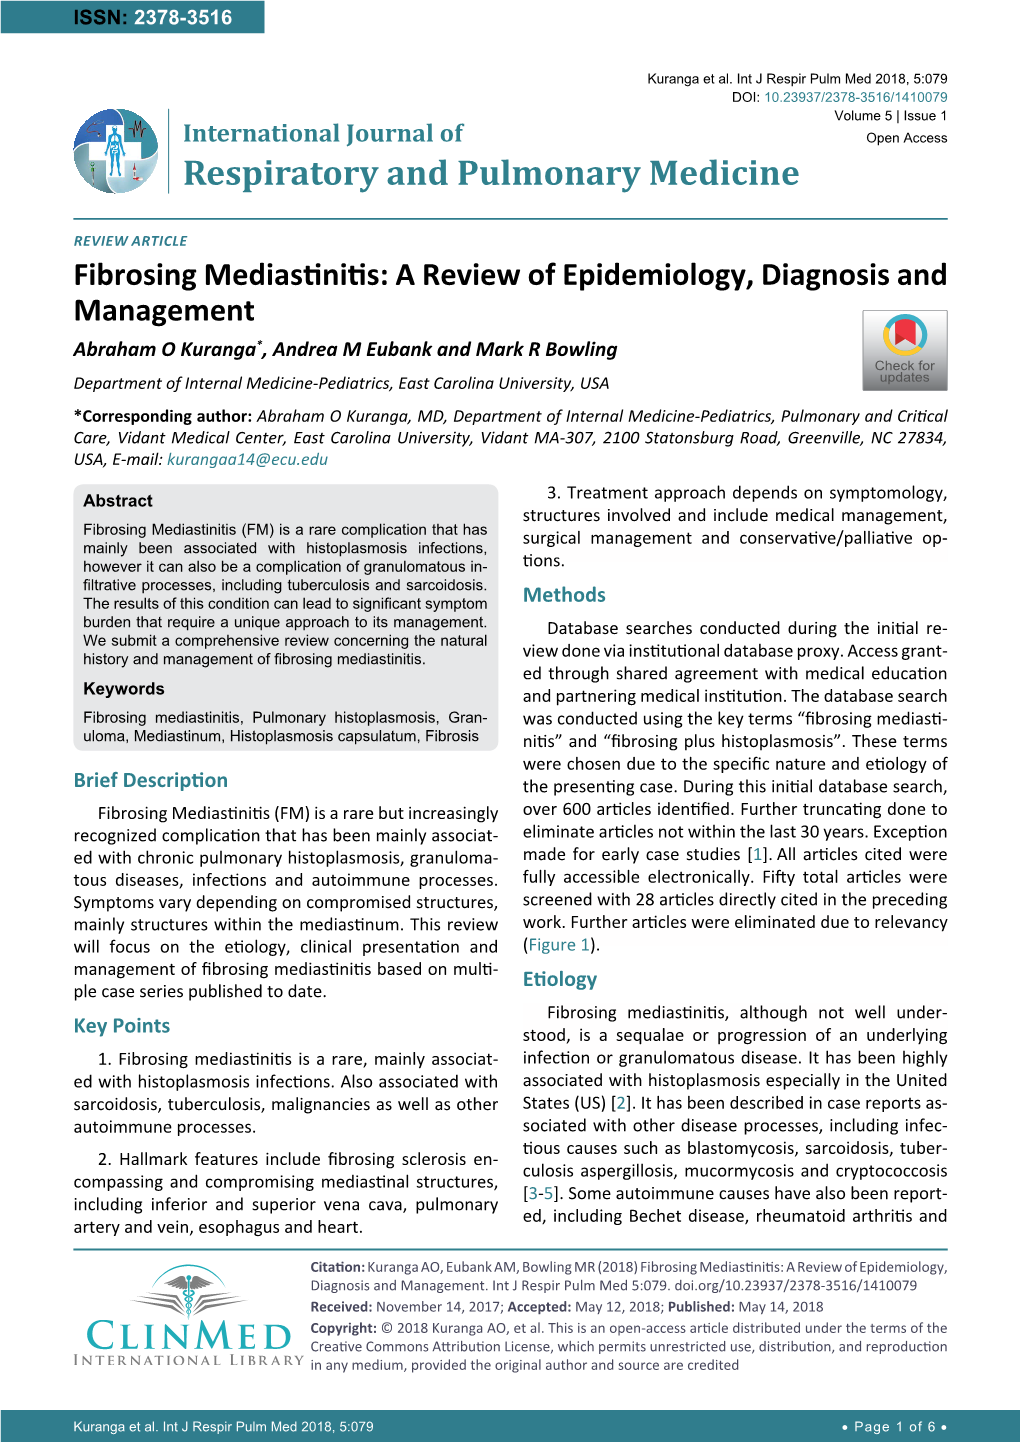 Fibrosing Mediastinitis